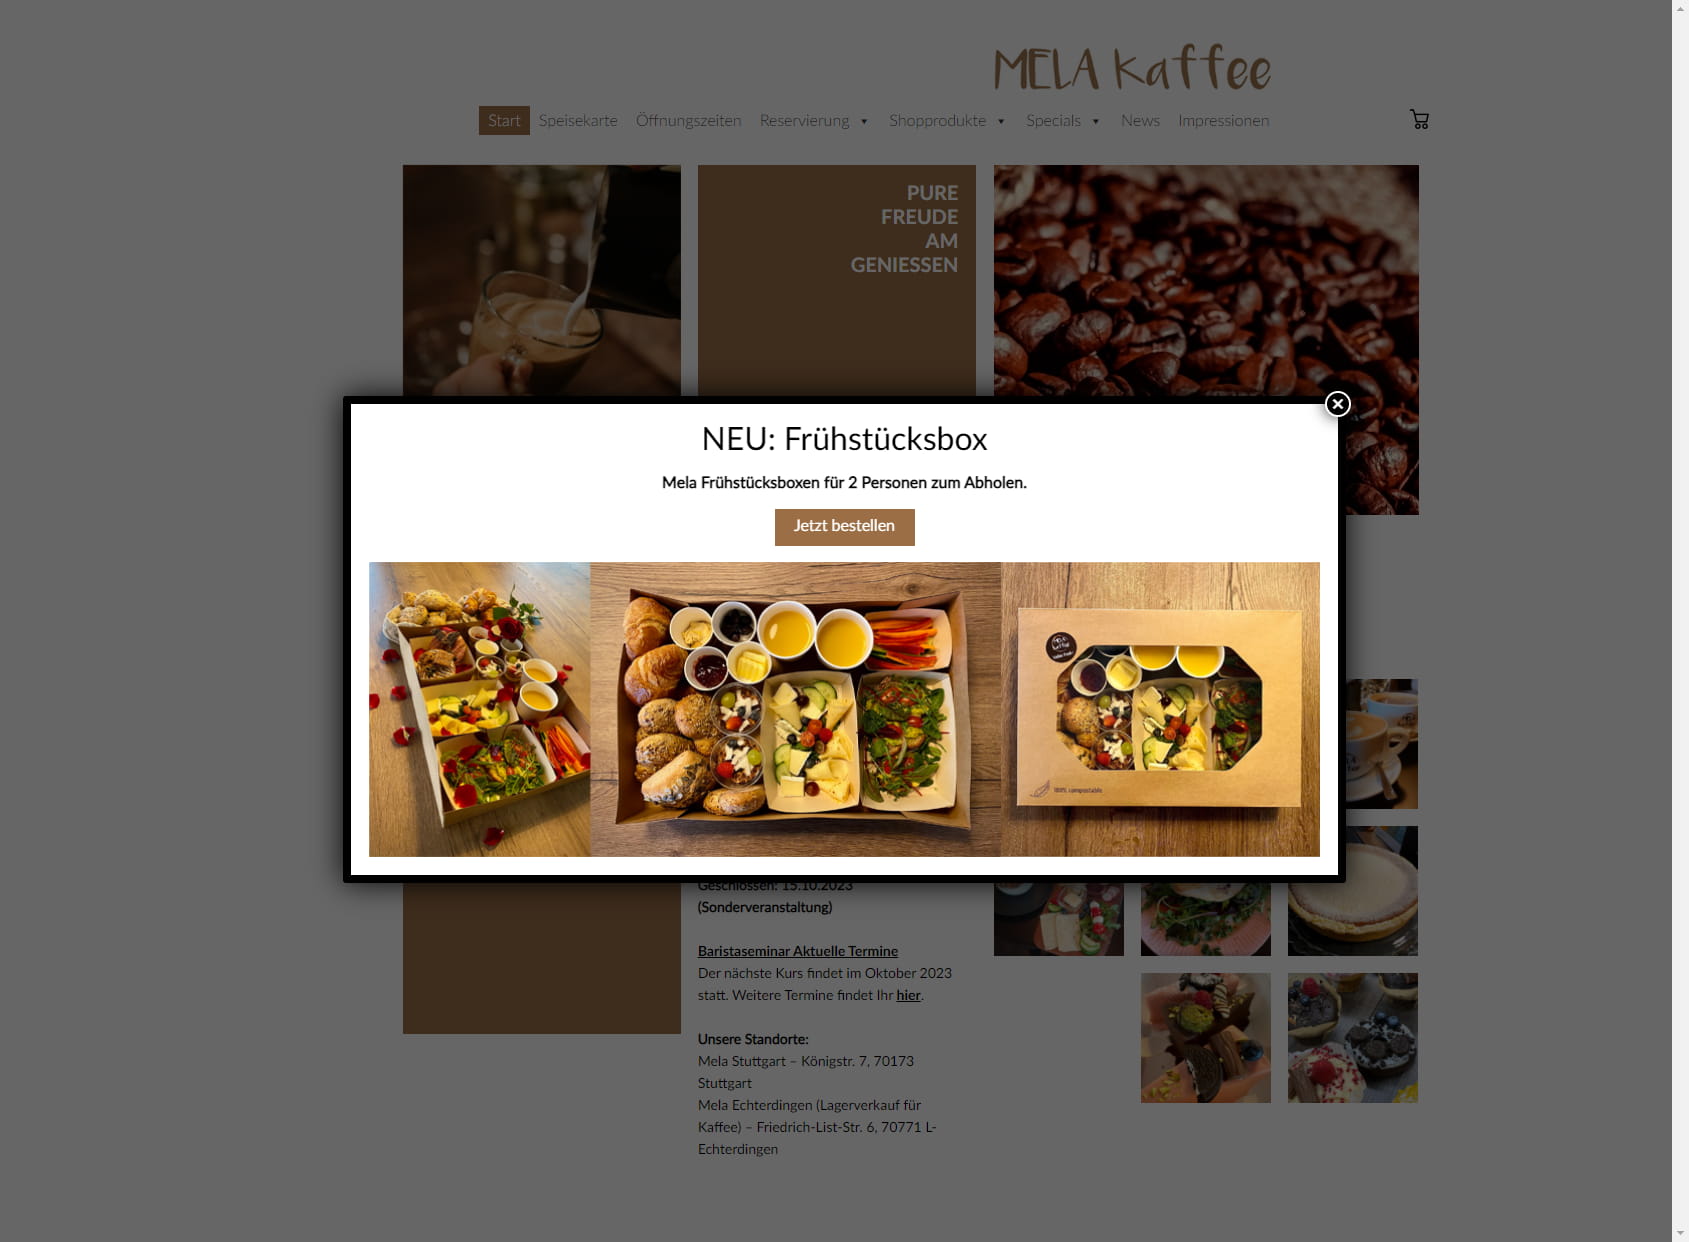 Mela Kaffee & Cafe GmbH